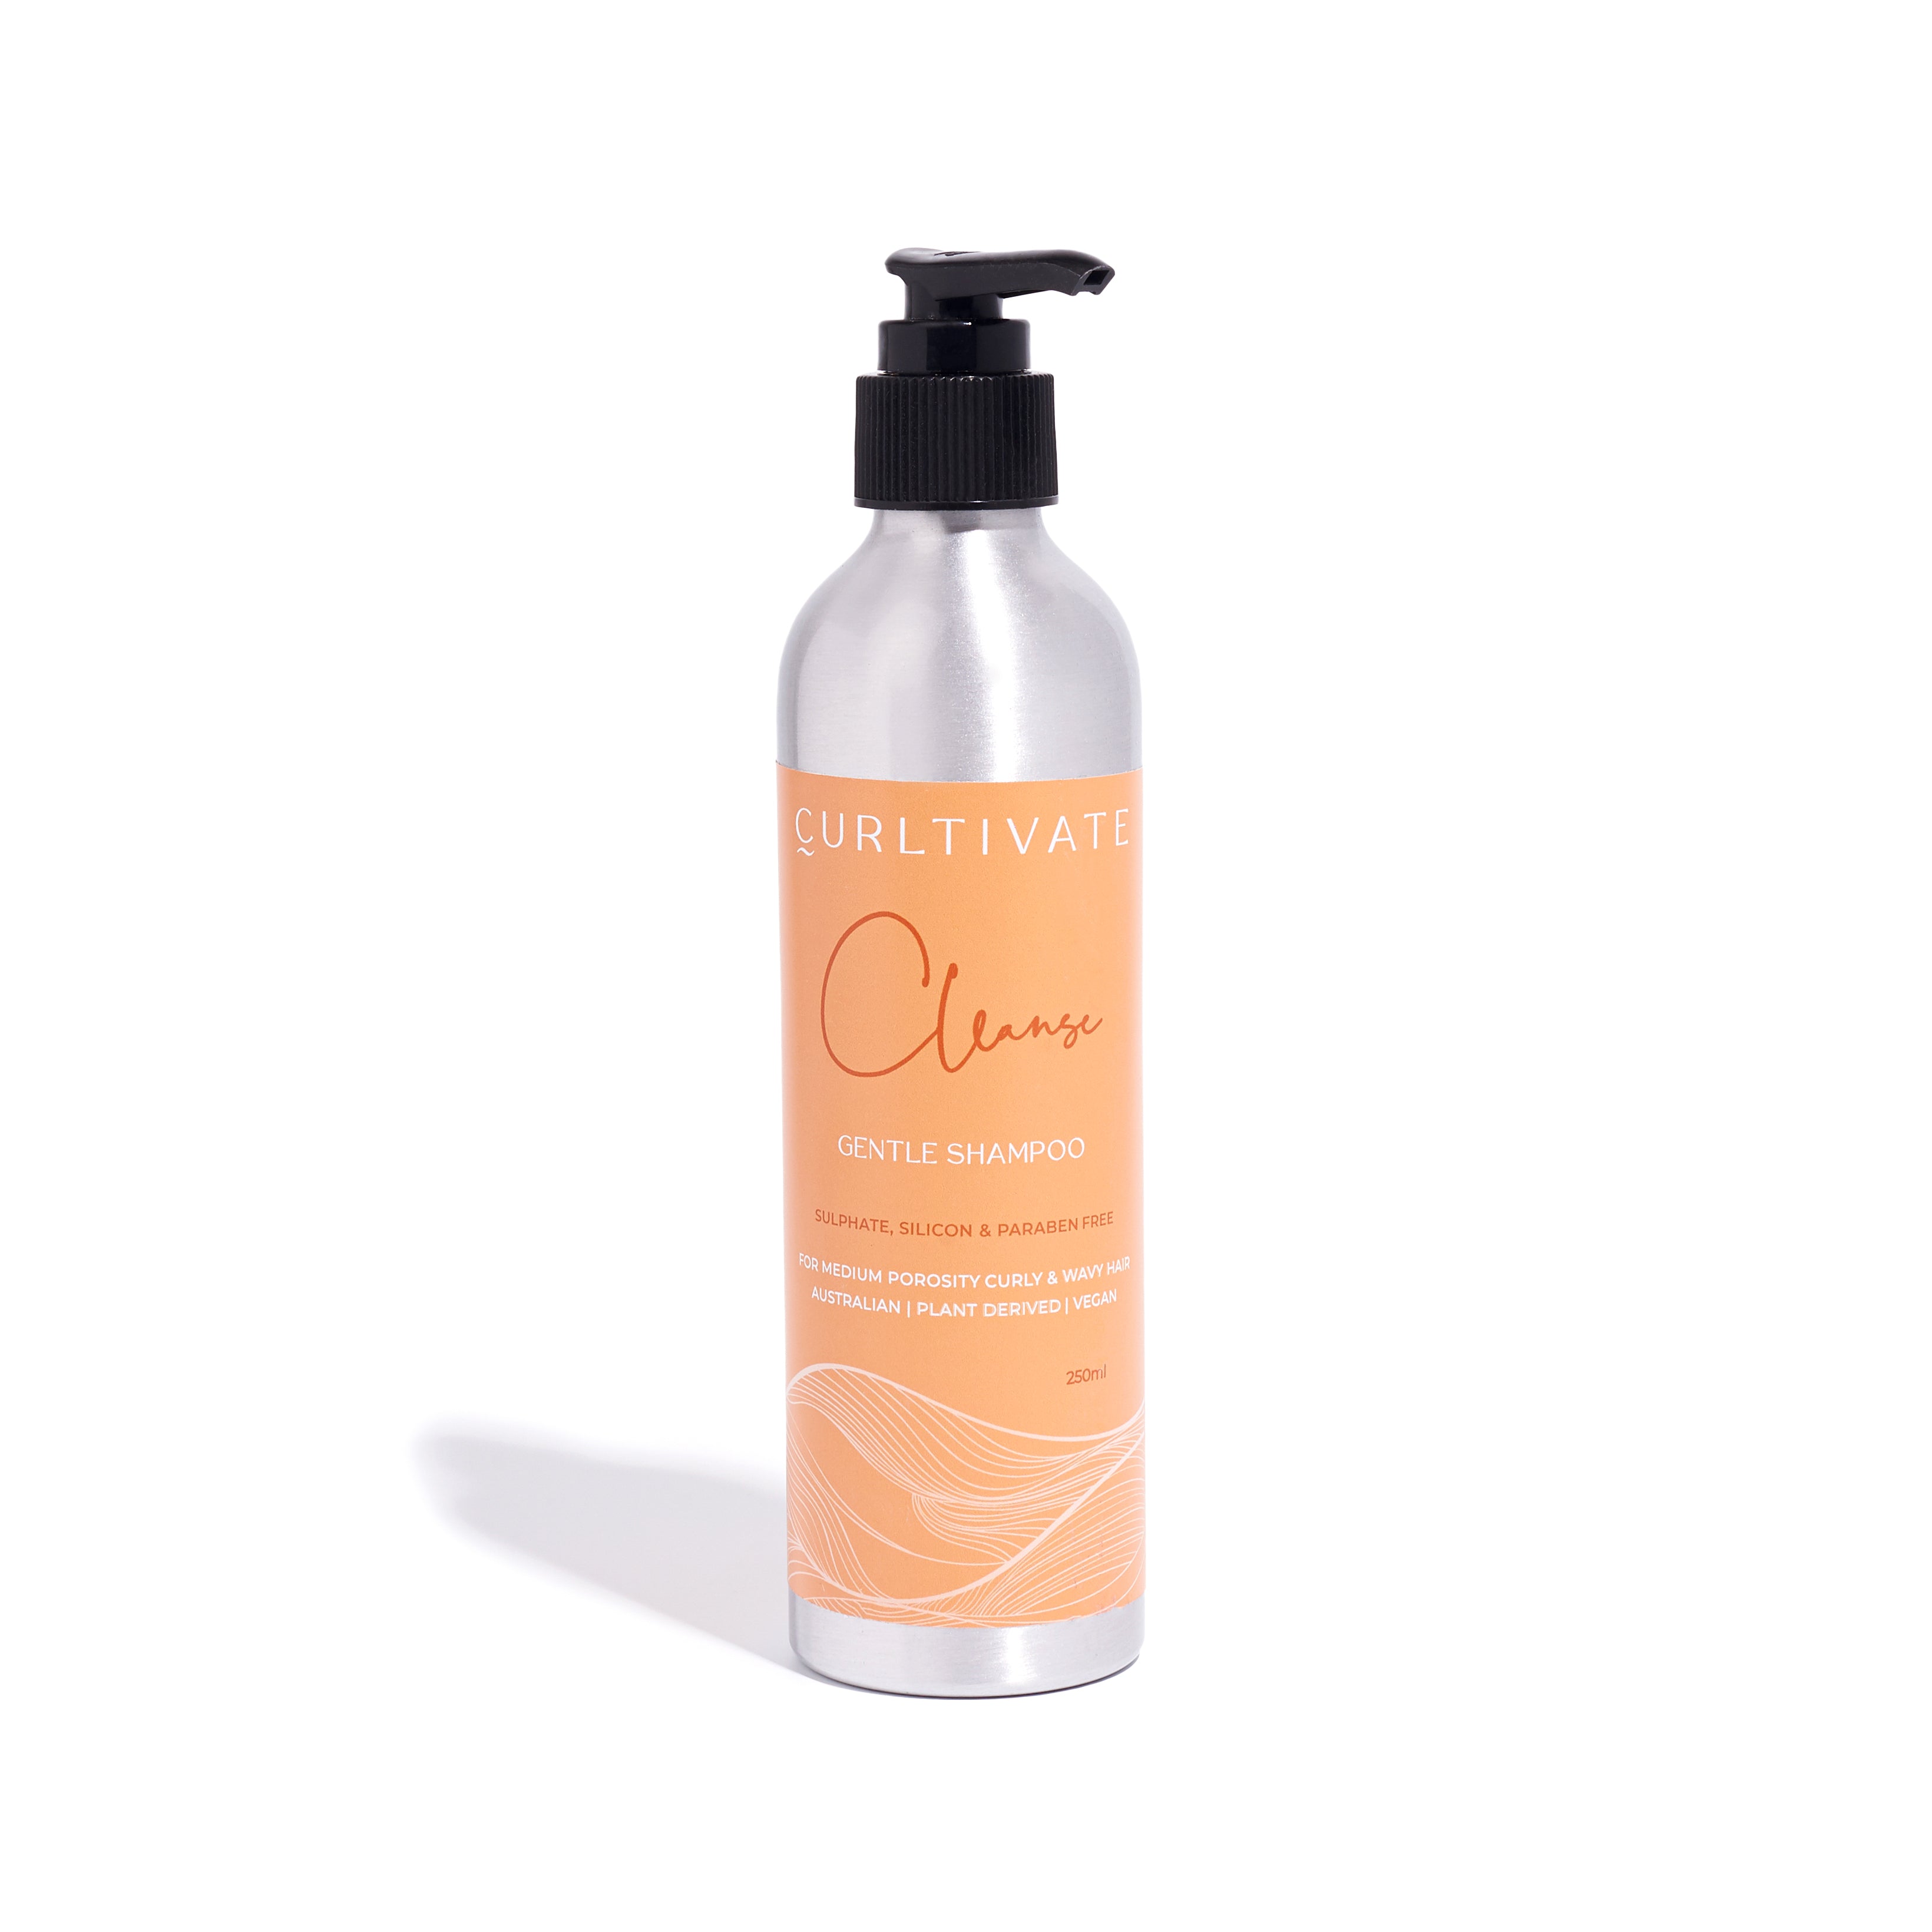 Medium Porosity Cleanse | Gentle Shampoo